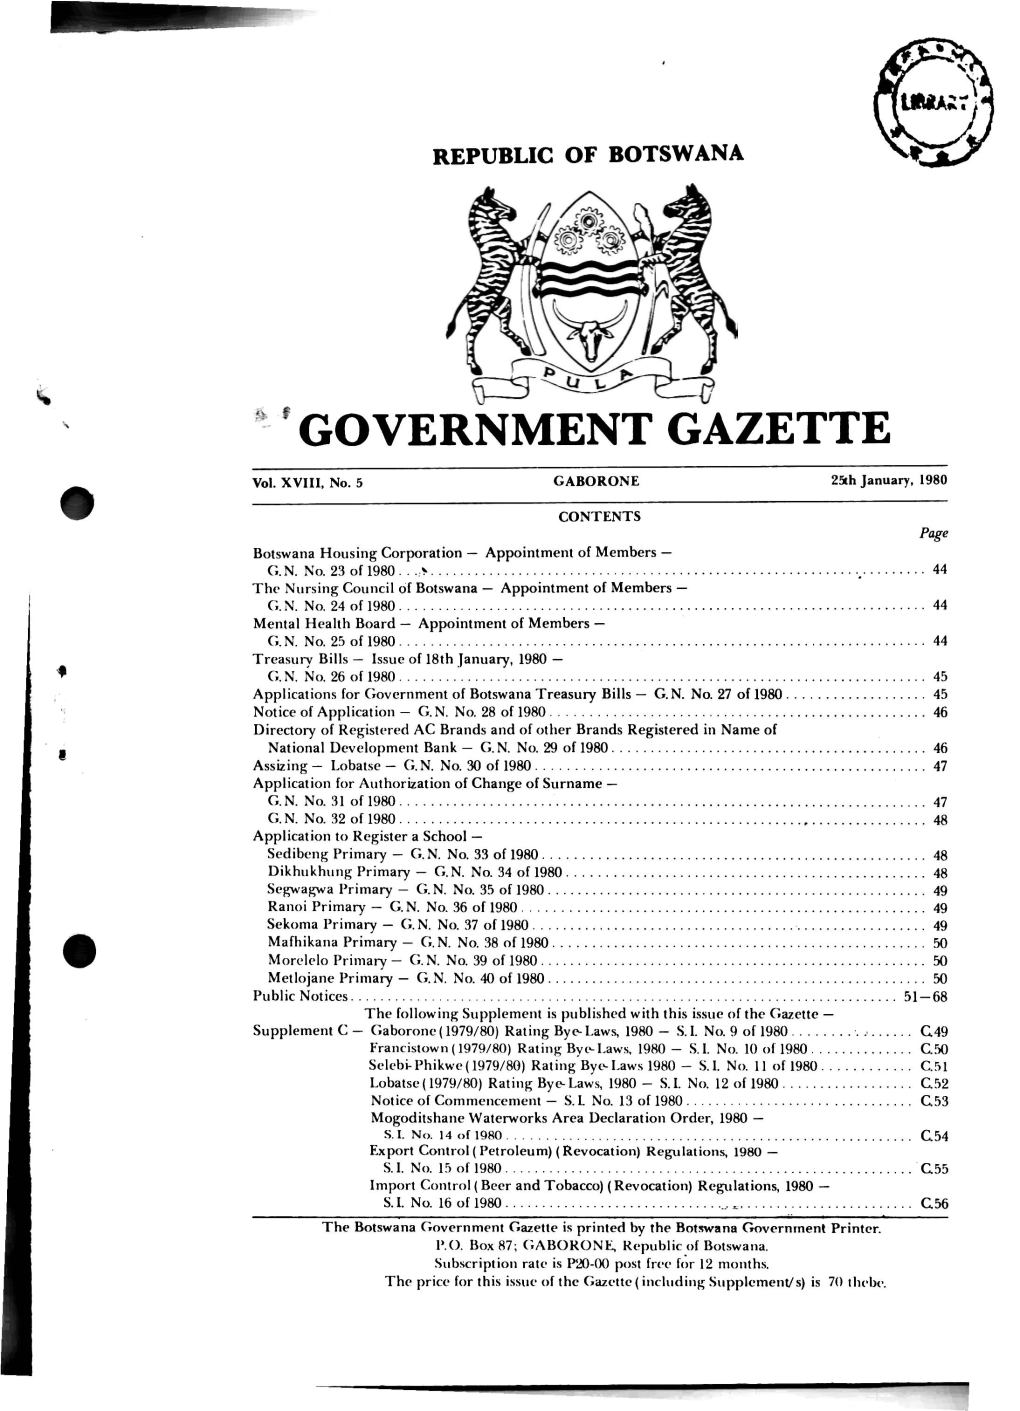 *'Government Gazette